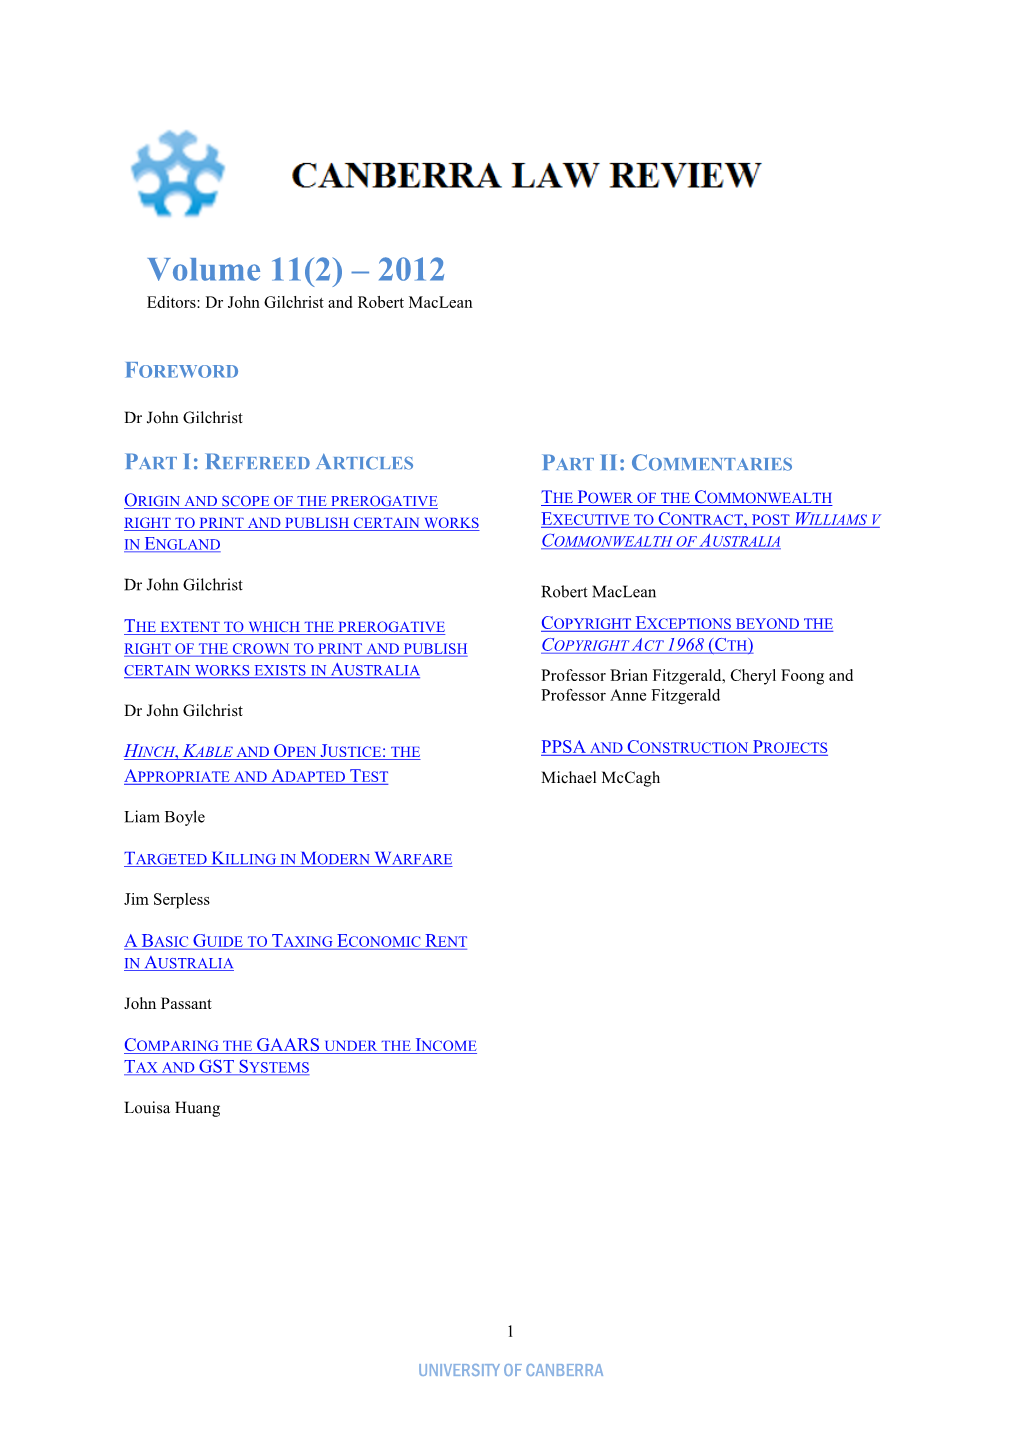 Volume 11(2) – 2012 Editors: Dr John Gilchrist and Robert Maclean